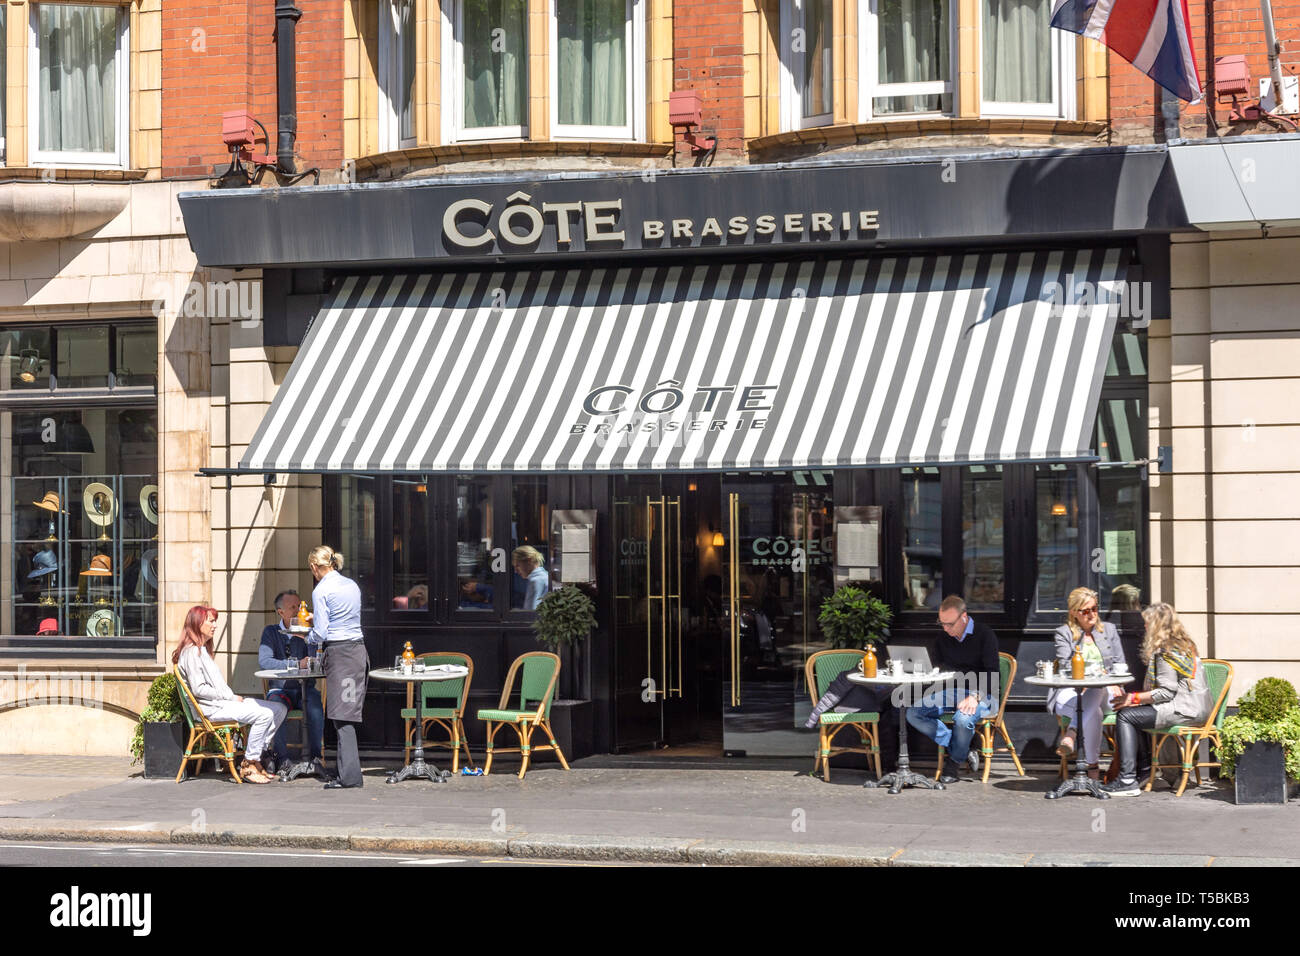 Cote Brasserie French restaurant, Sloane Square, Chelsea, Royal Borough of Kensington and Chelsea, Greater London, England, United Kingdom Stock Photo